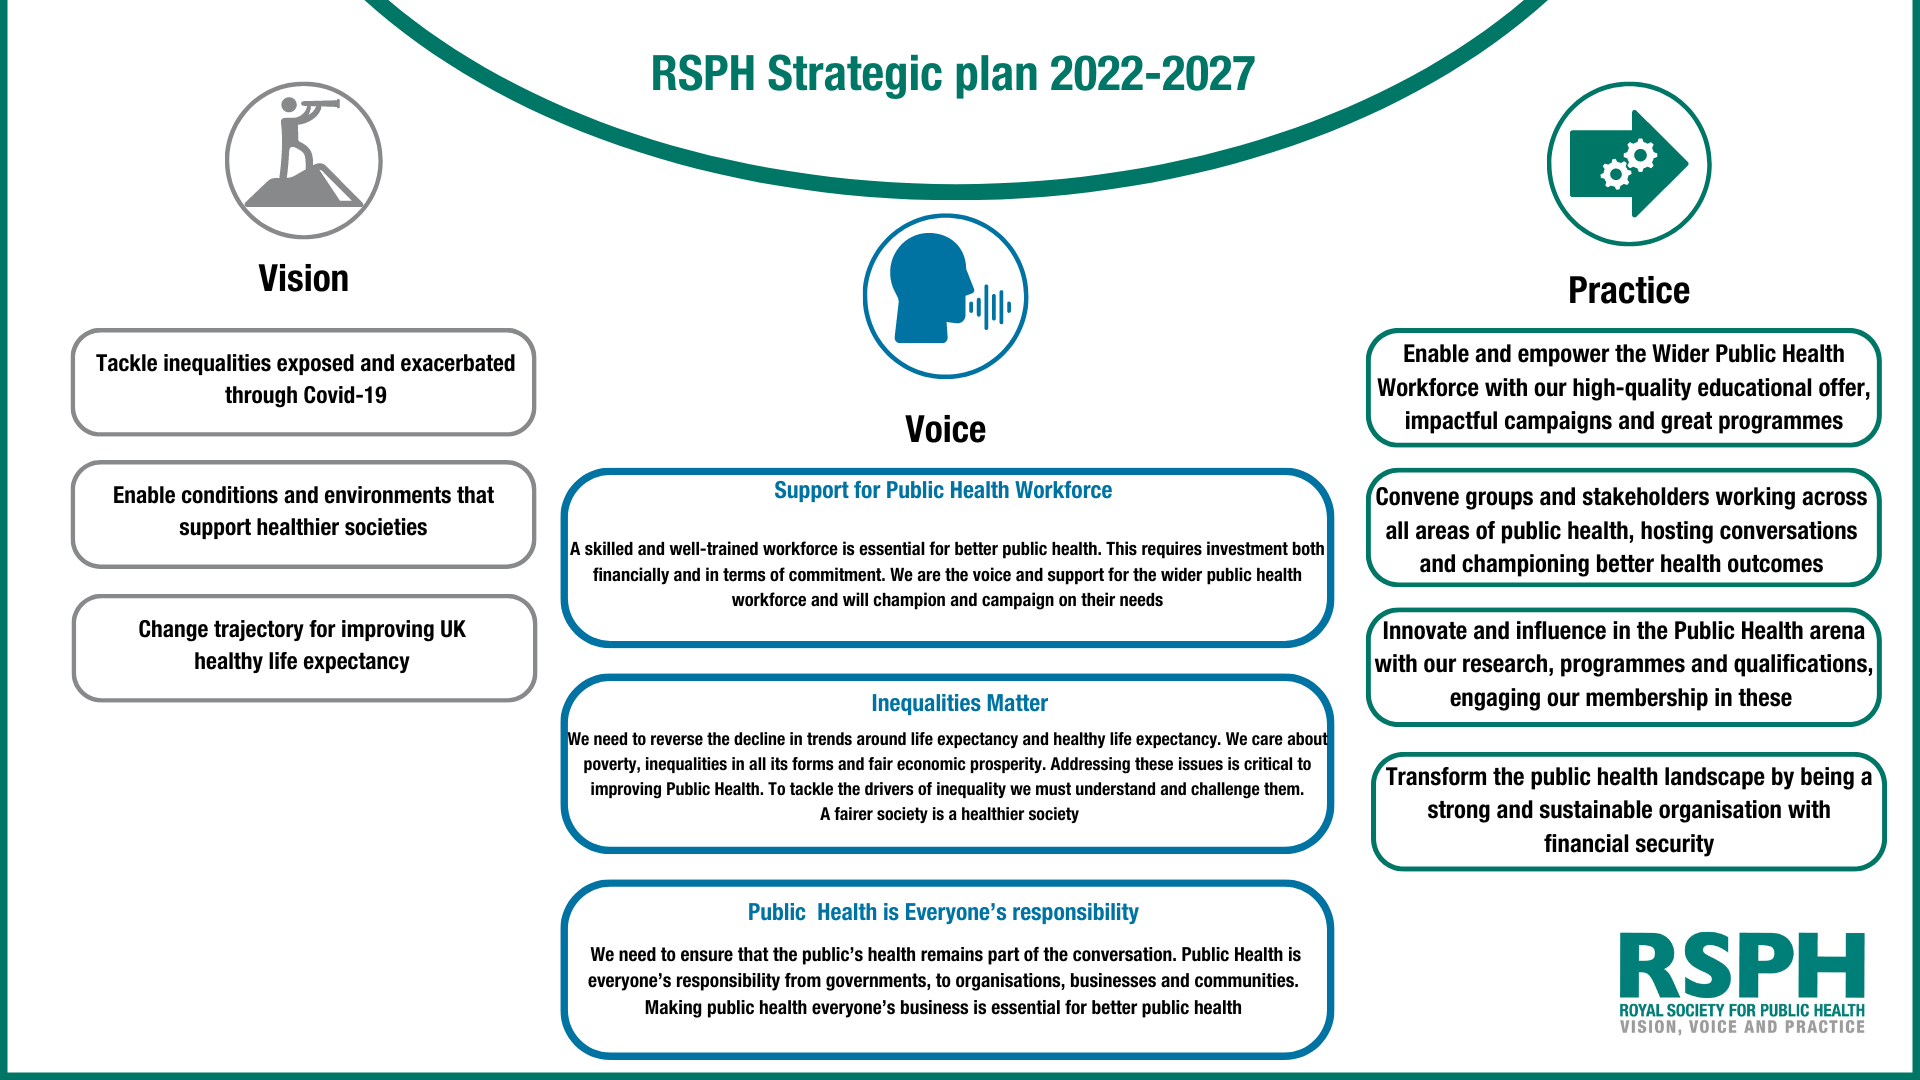 image of strategic plan 2022-2027